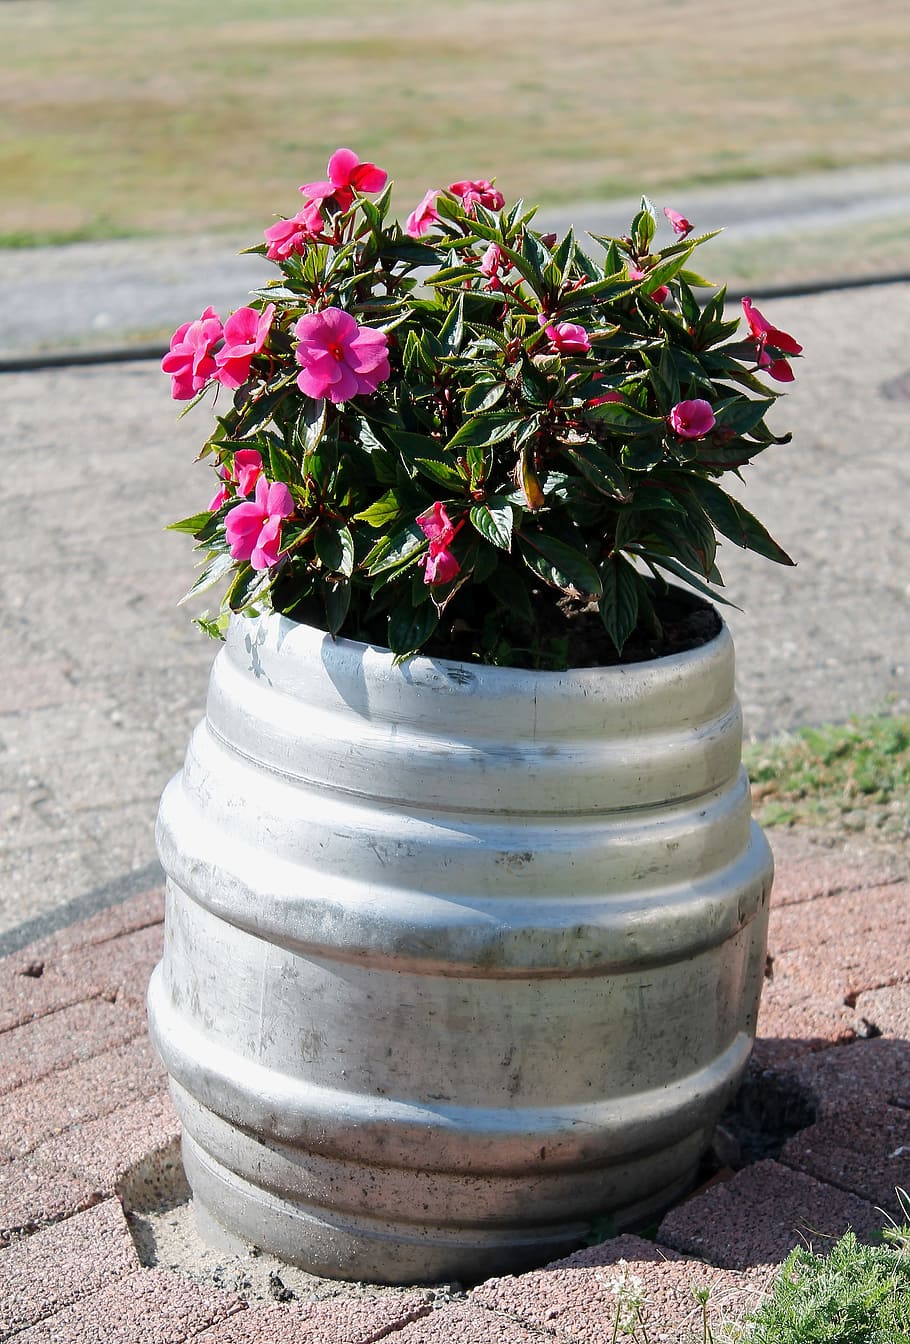 Flowers, Beer Keg, Planters, Plant, nature, flower, outdoors, flower Pot, summer, day